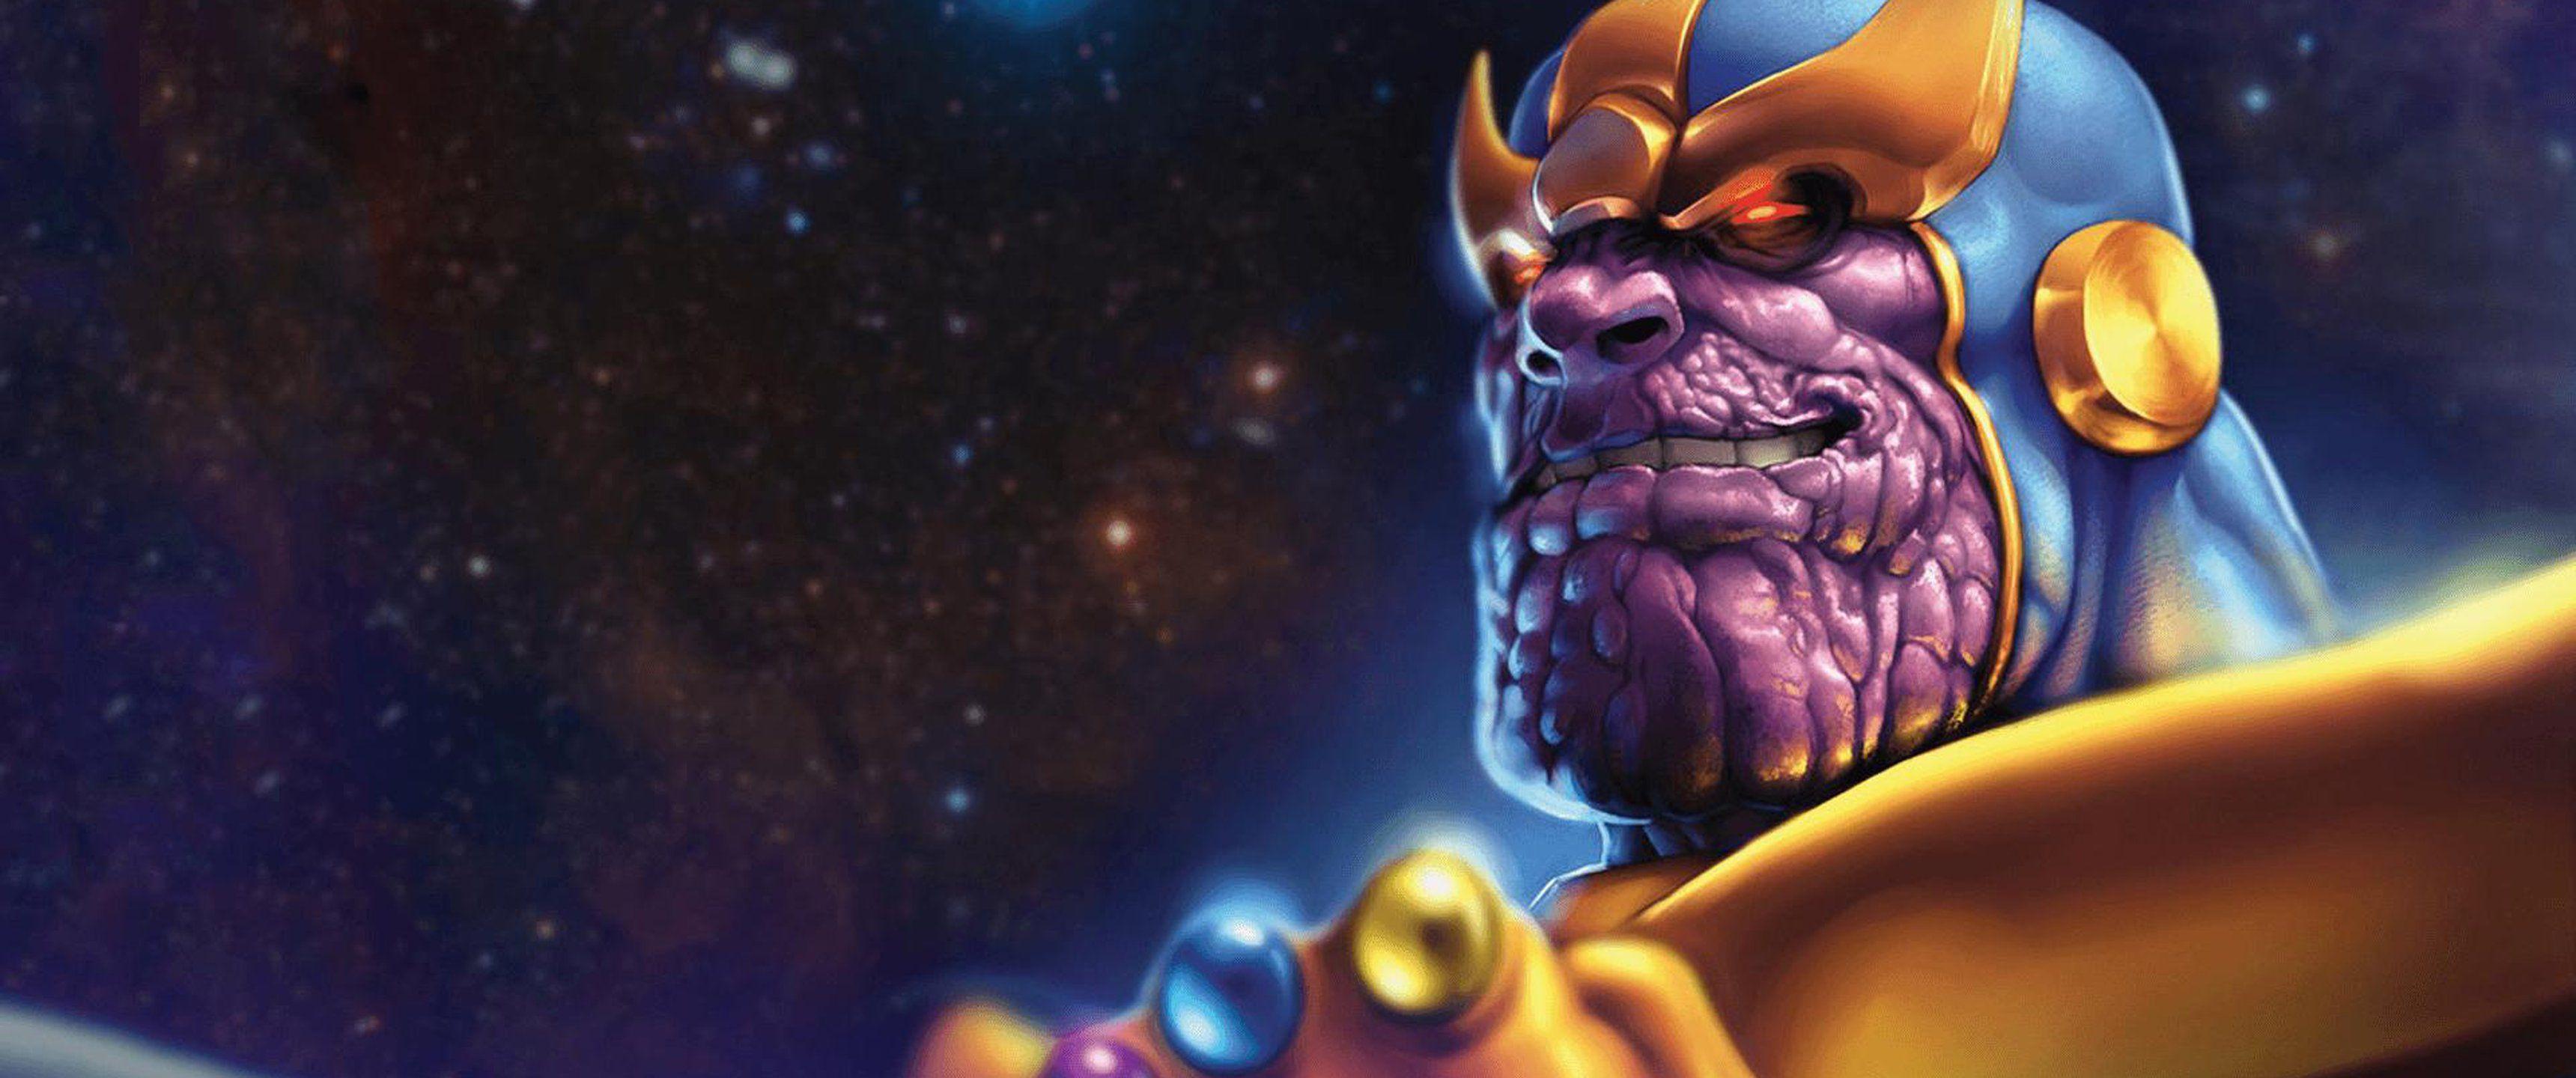 Thanos 7680 1440 Wallpapers Top Free Thanos 7680 1440